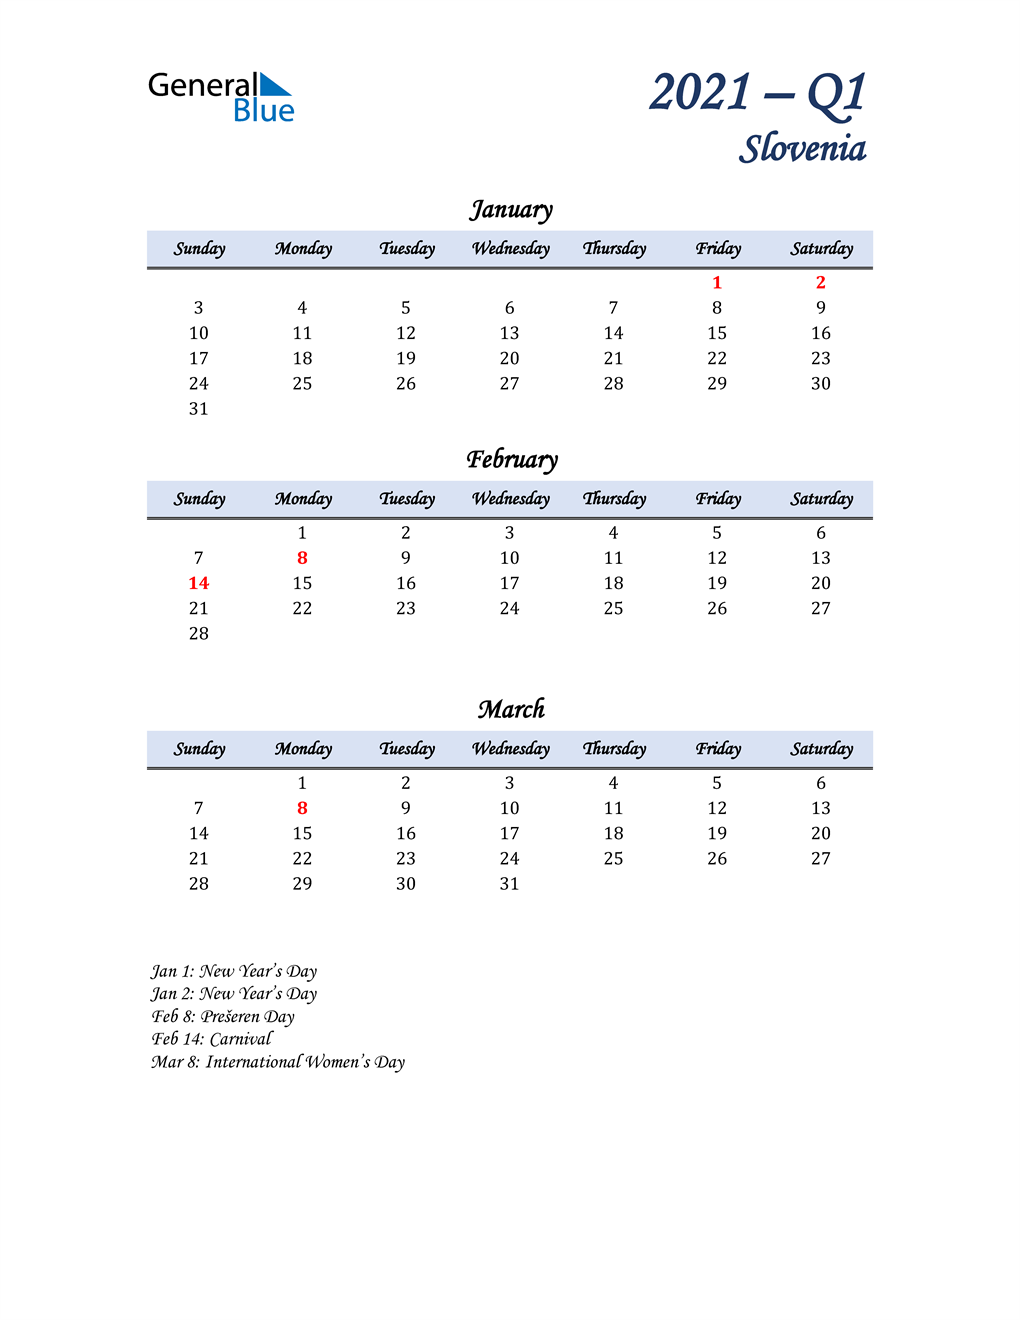  January, February, and March Calendar for Slovenia